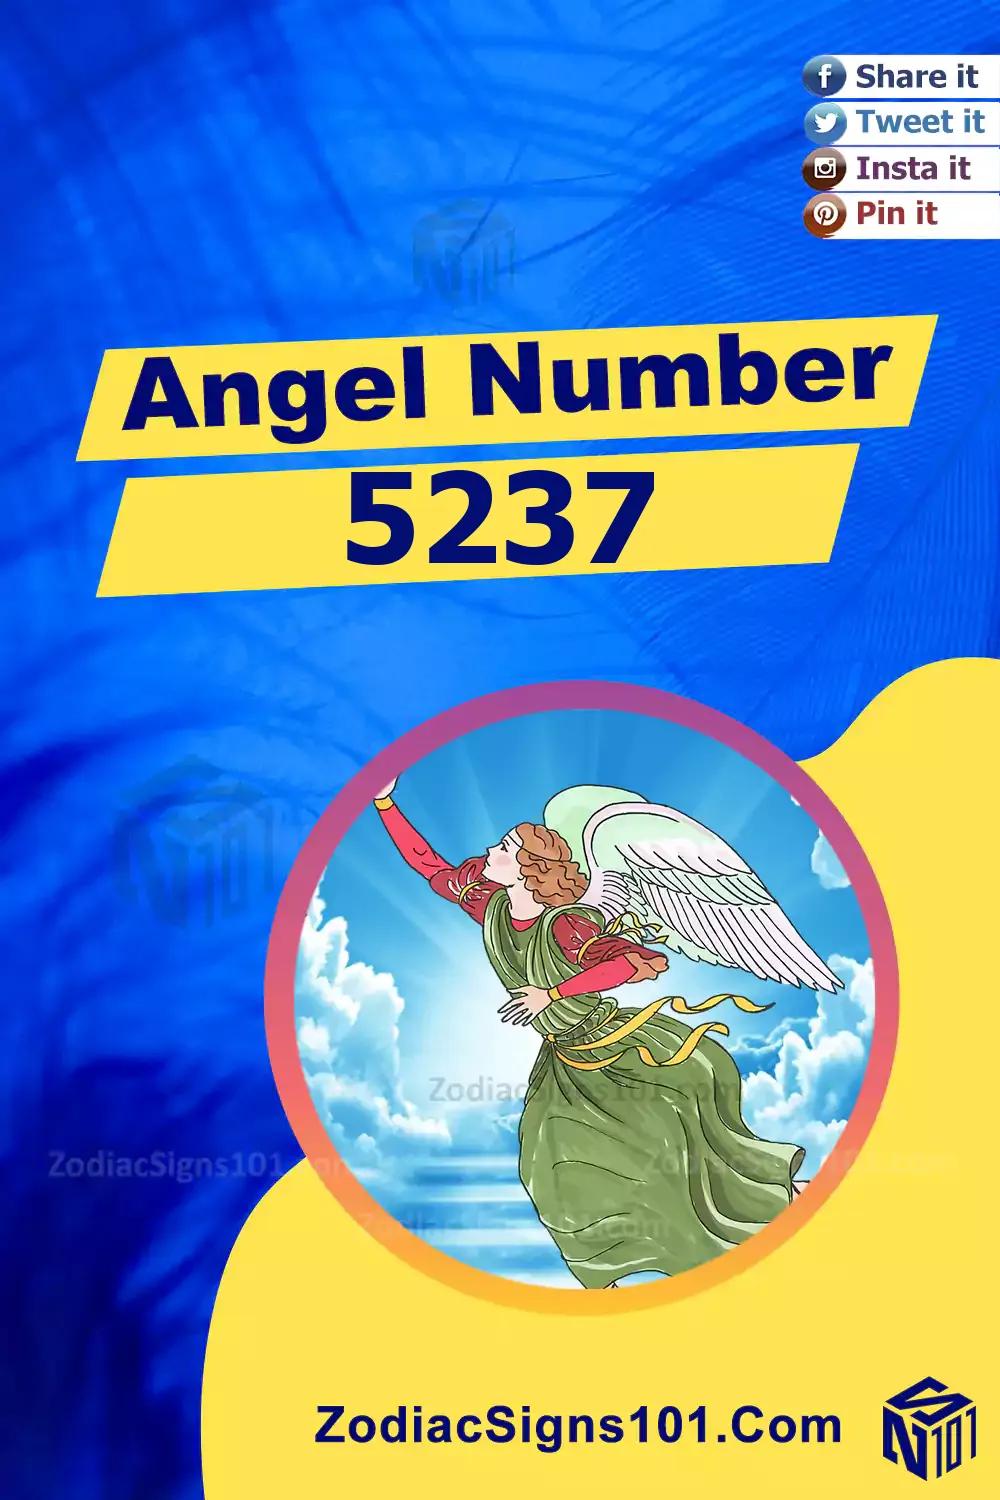 5237-Angel-Number-Meaning.jpg